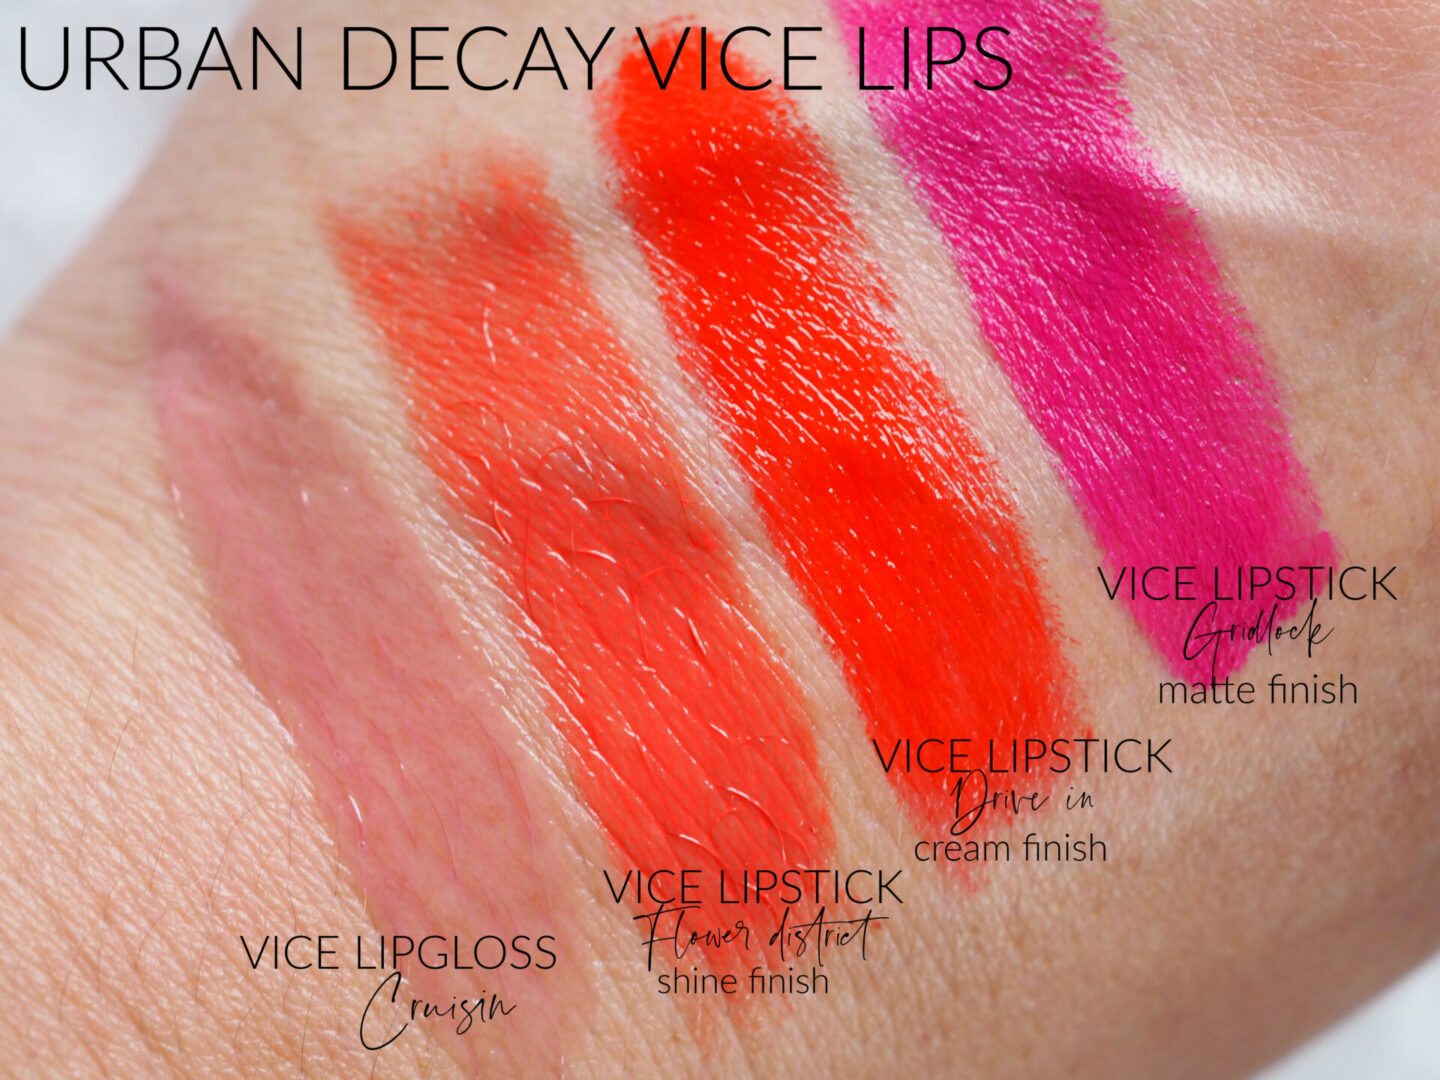 urban decay new vice lipsticks swatches